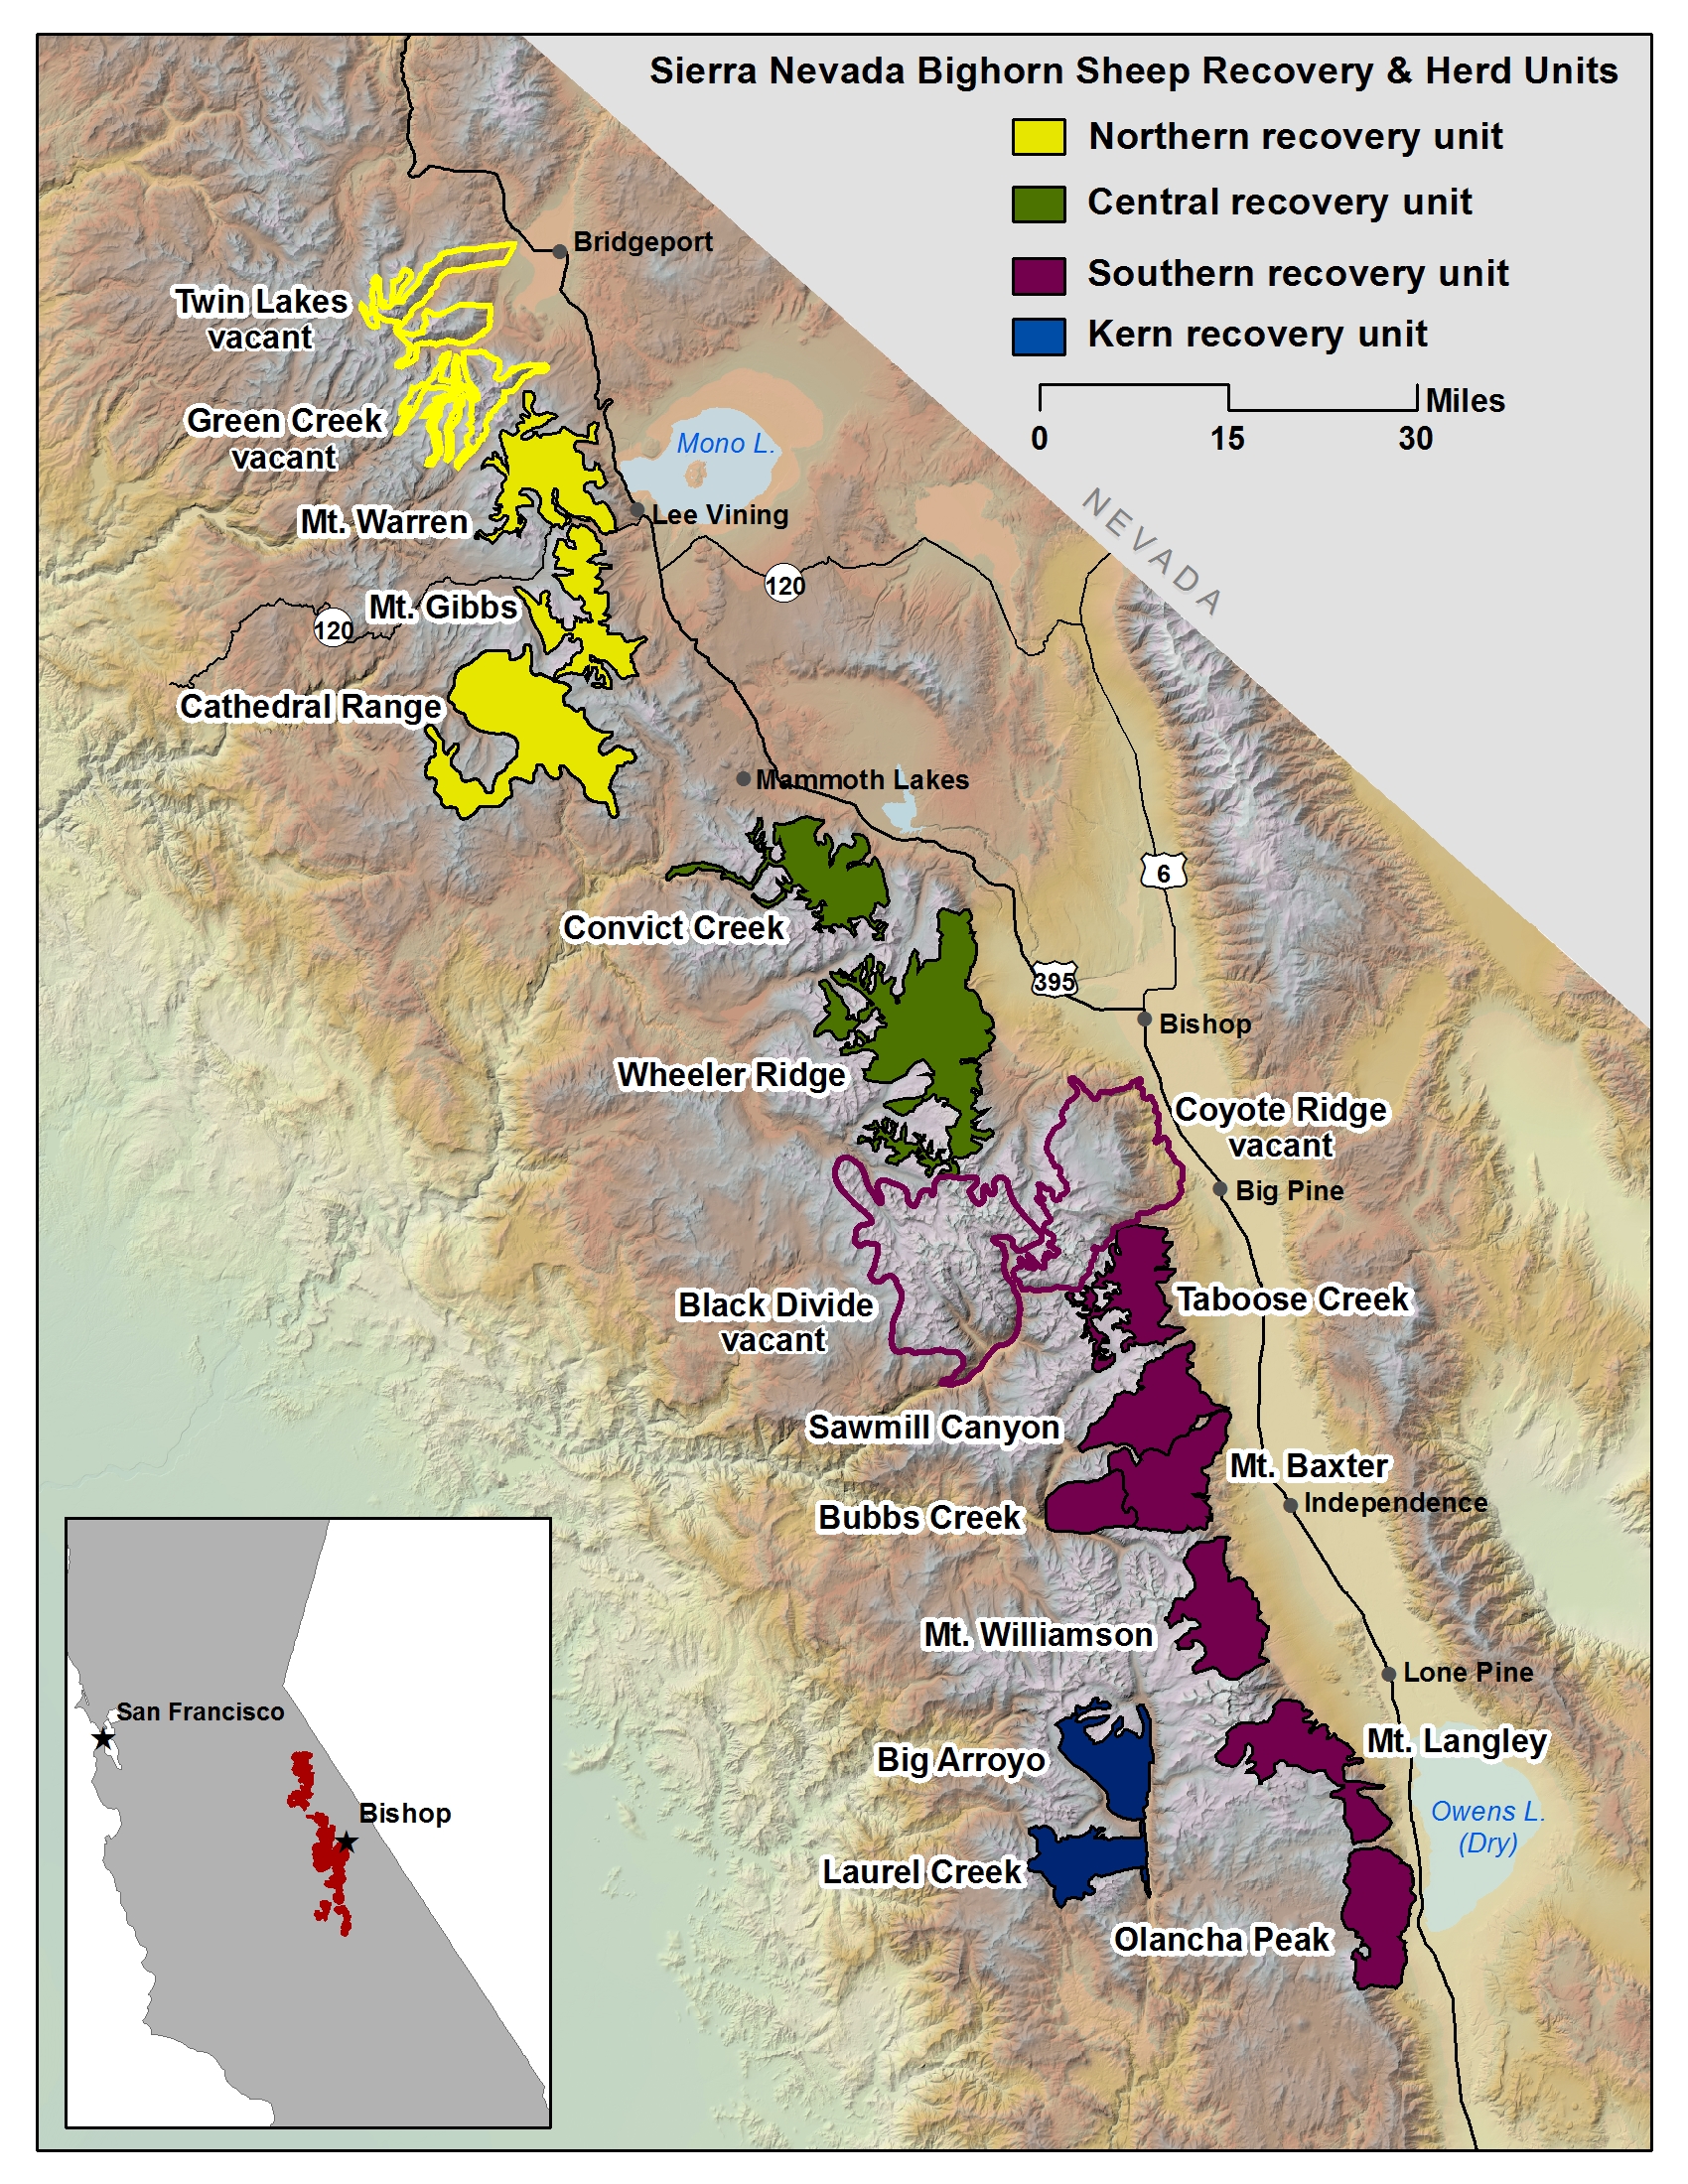 Sierra Nevada Bighorn Sheep Maps And Locations